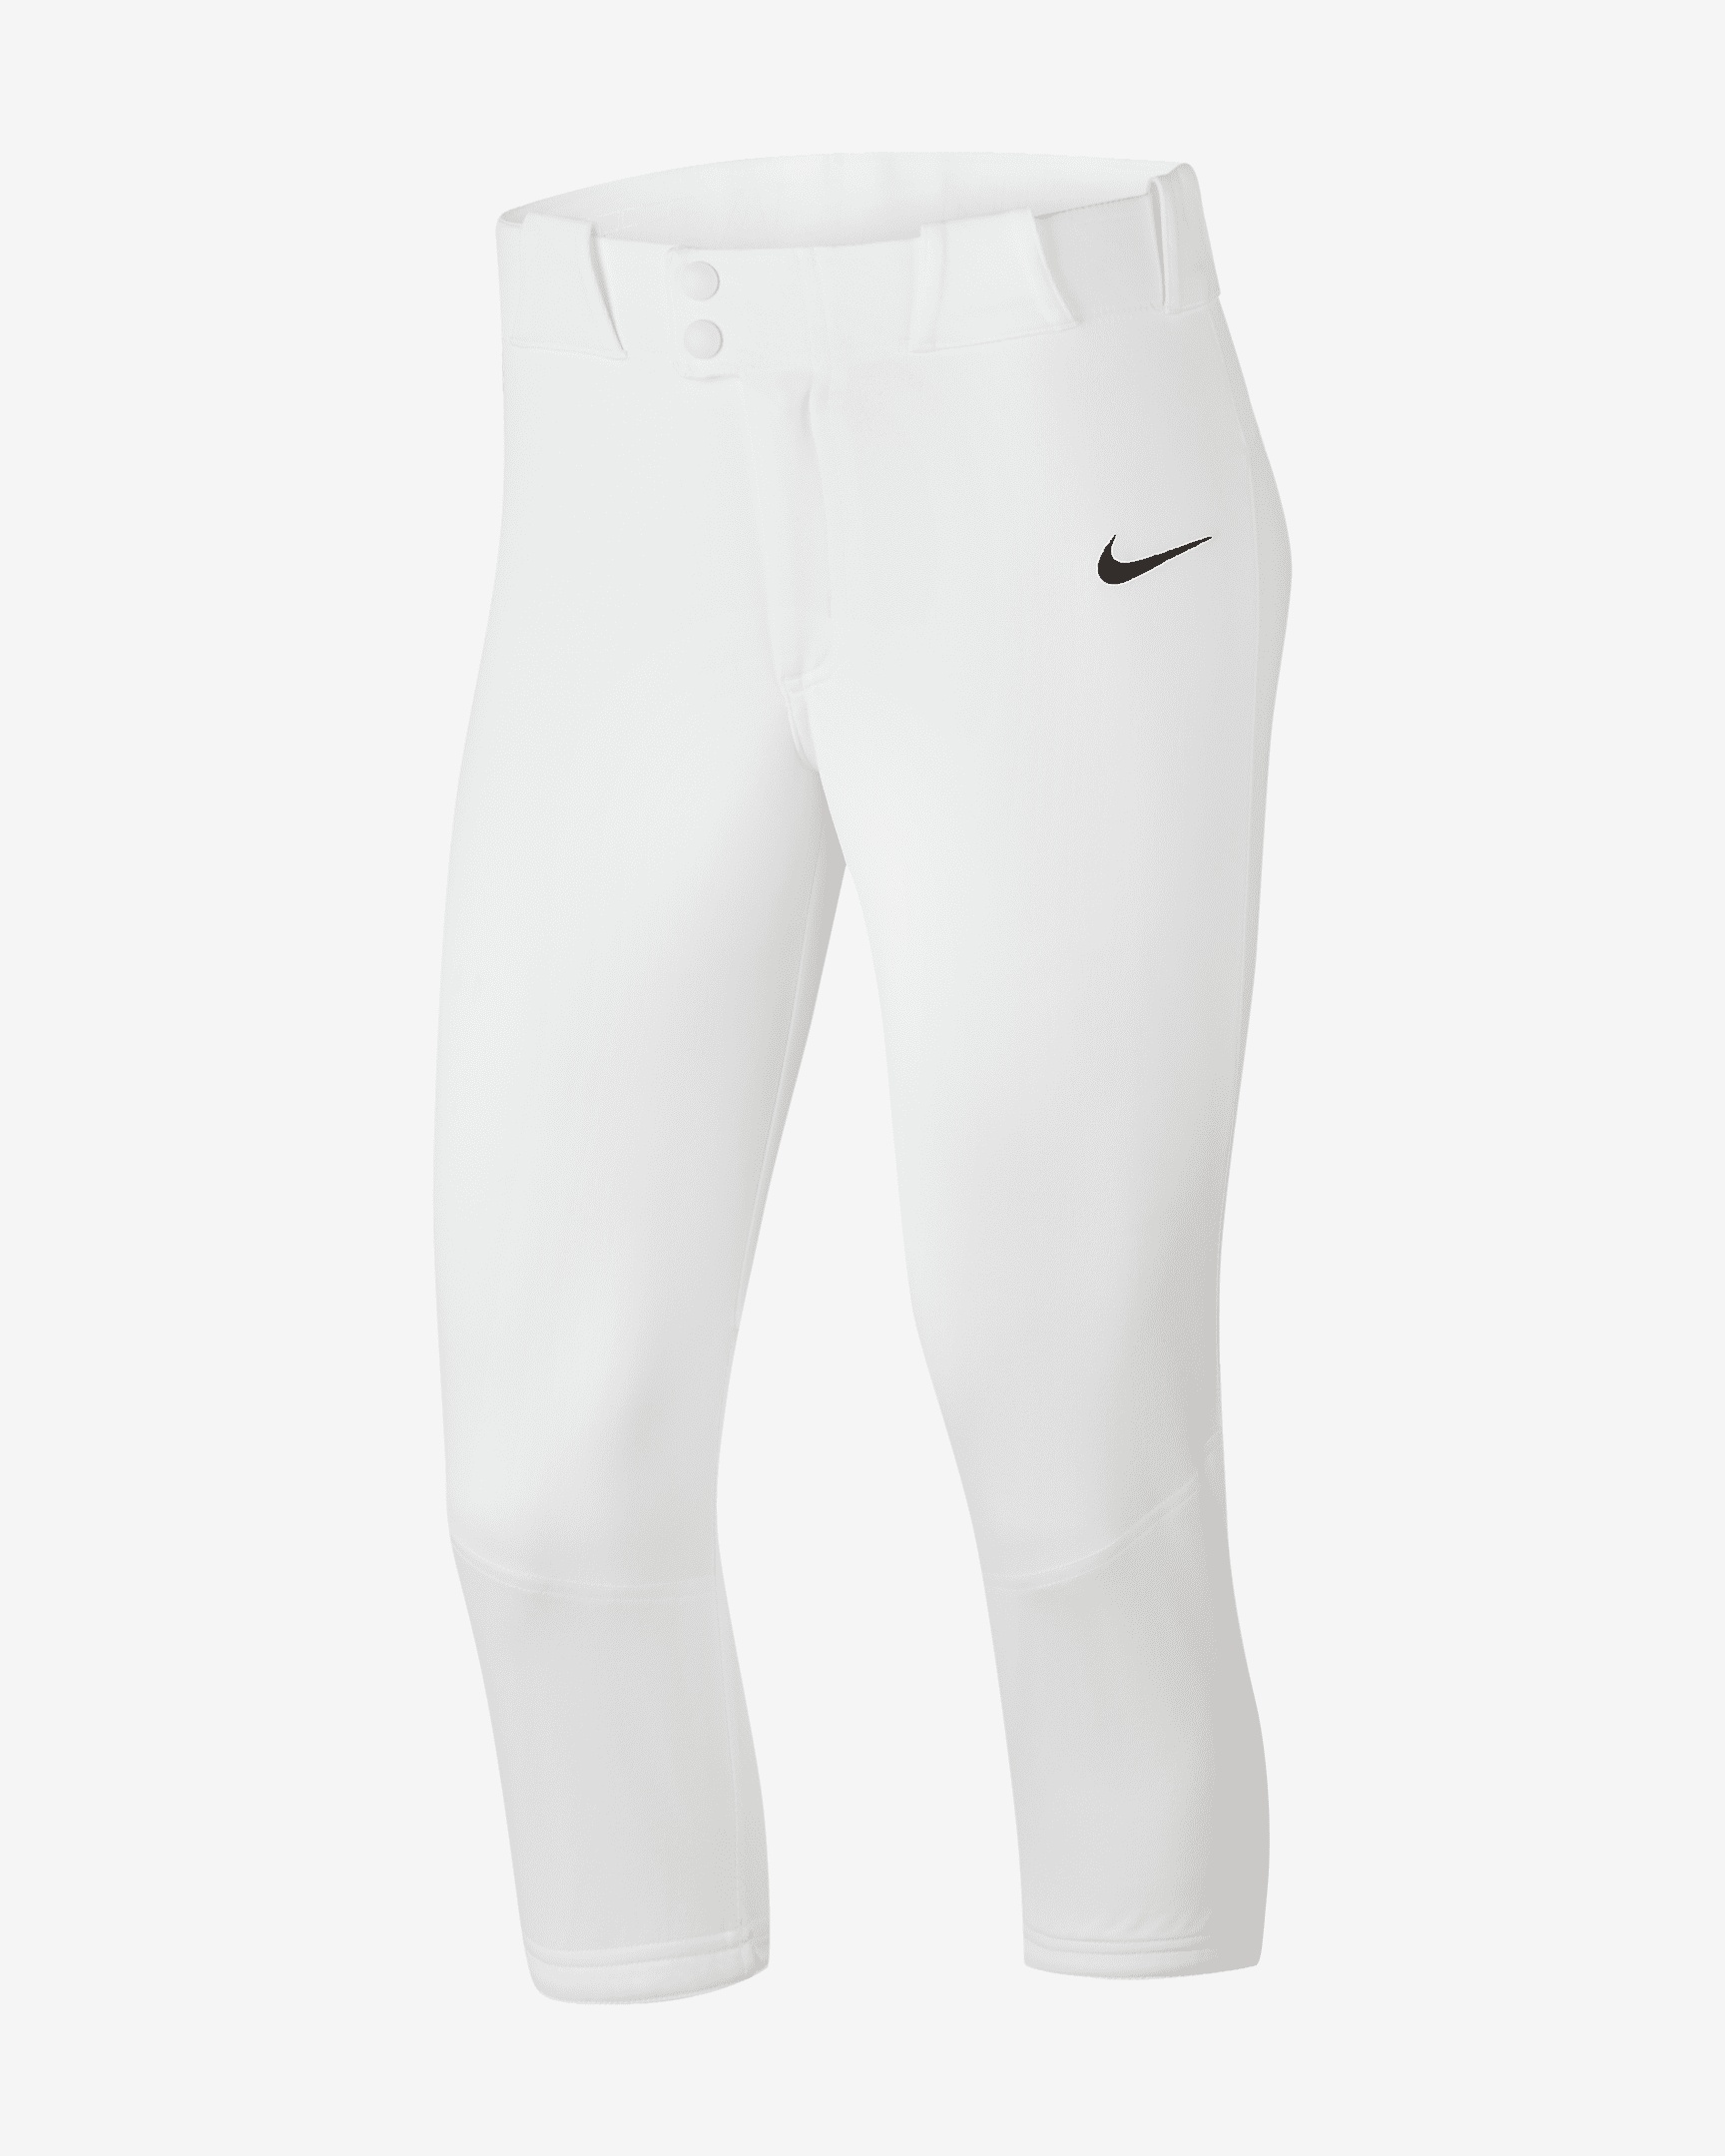 Nike Women's Vapor Select 3/4-Length Softball Pants - 1